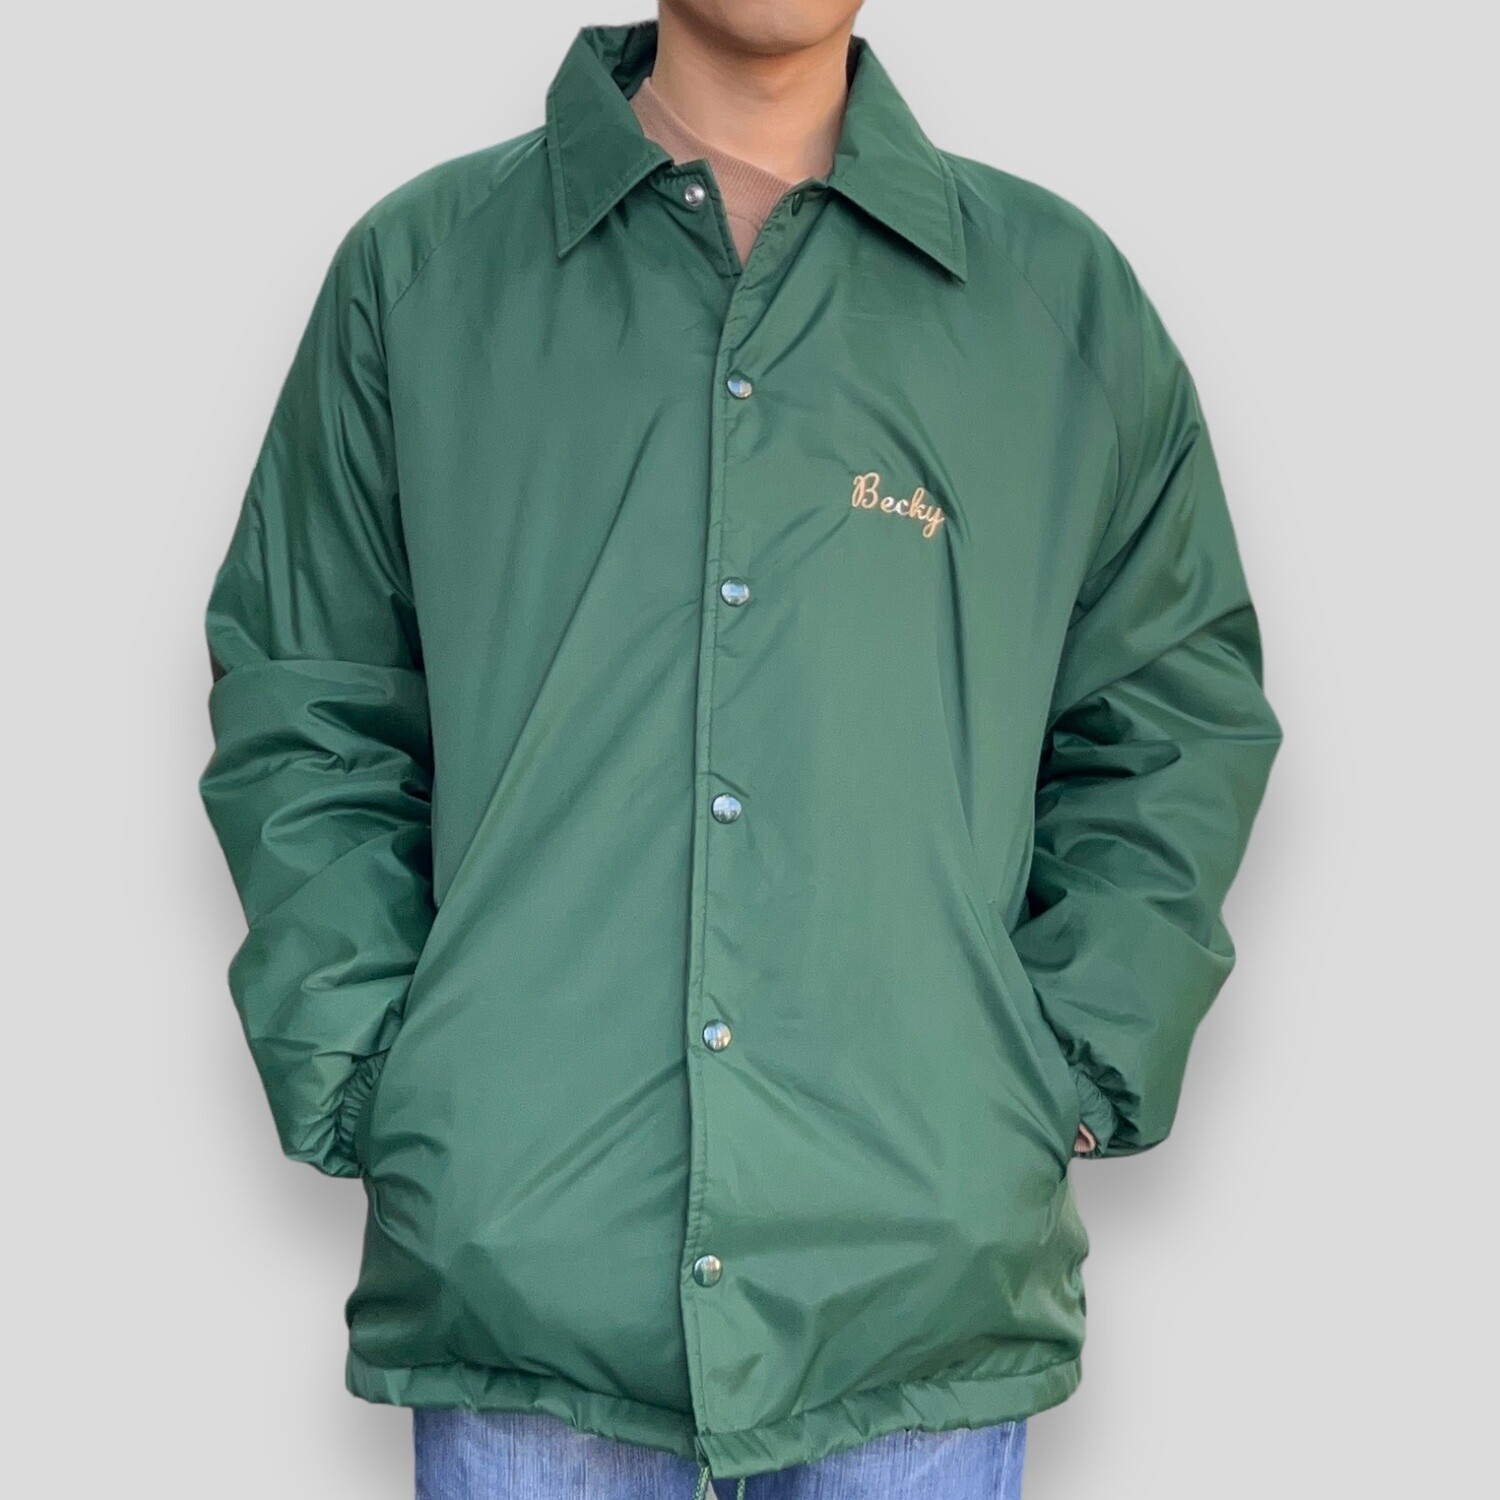 Vintage Yoorols Conyettes Club Jacket, Size: Medium, Color: Green, Style: Bomber